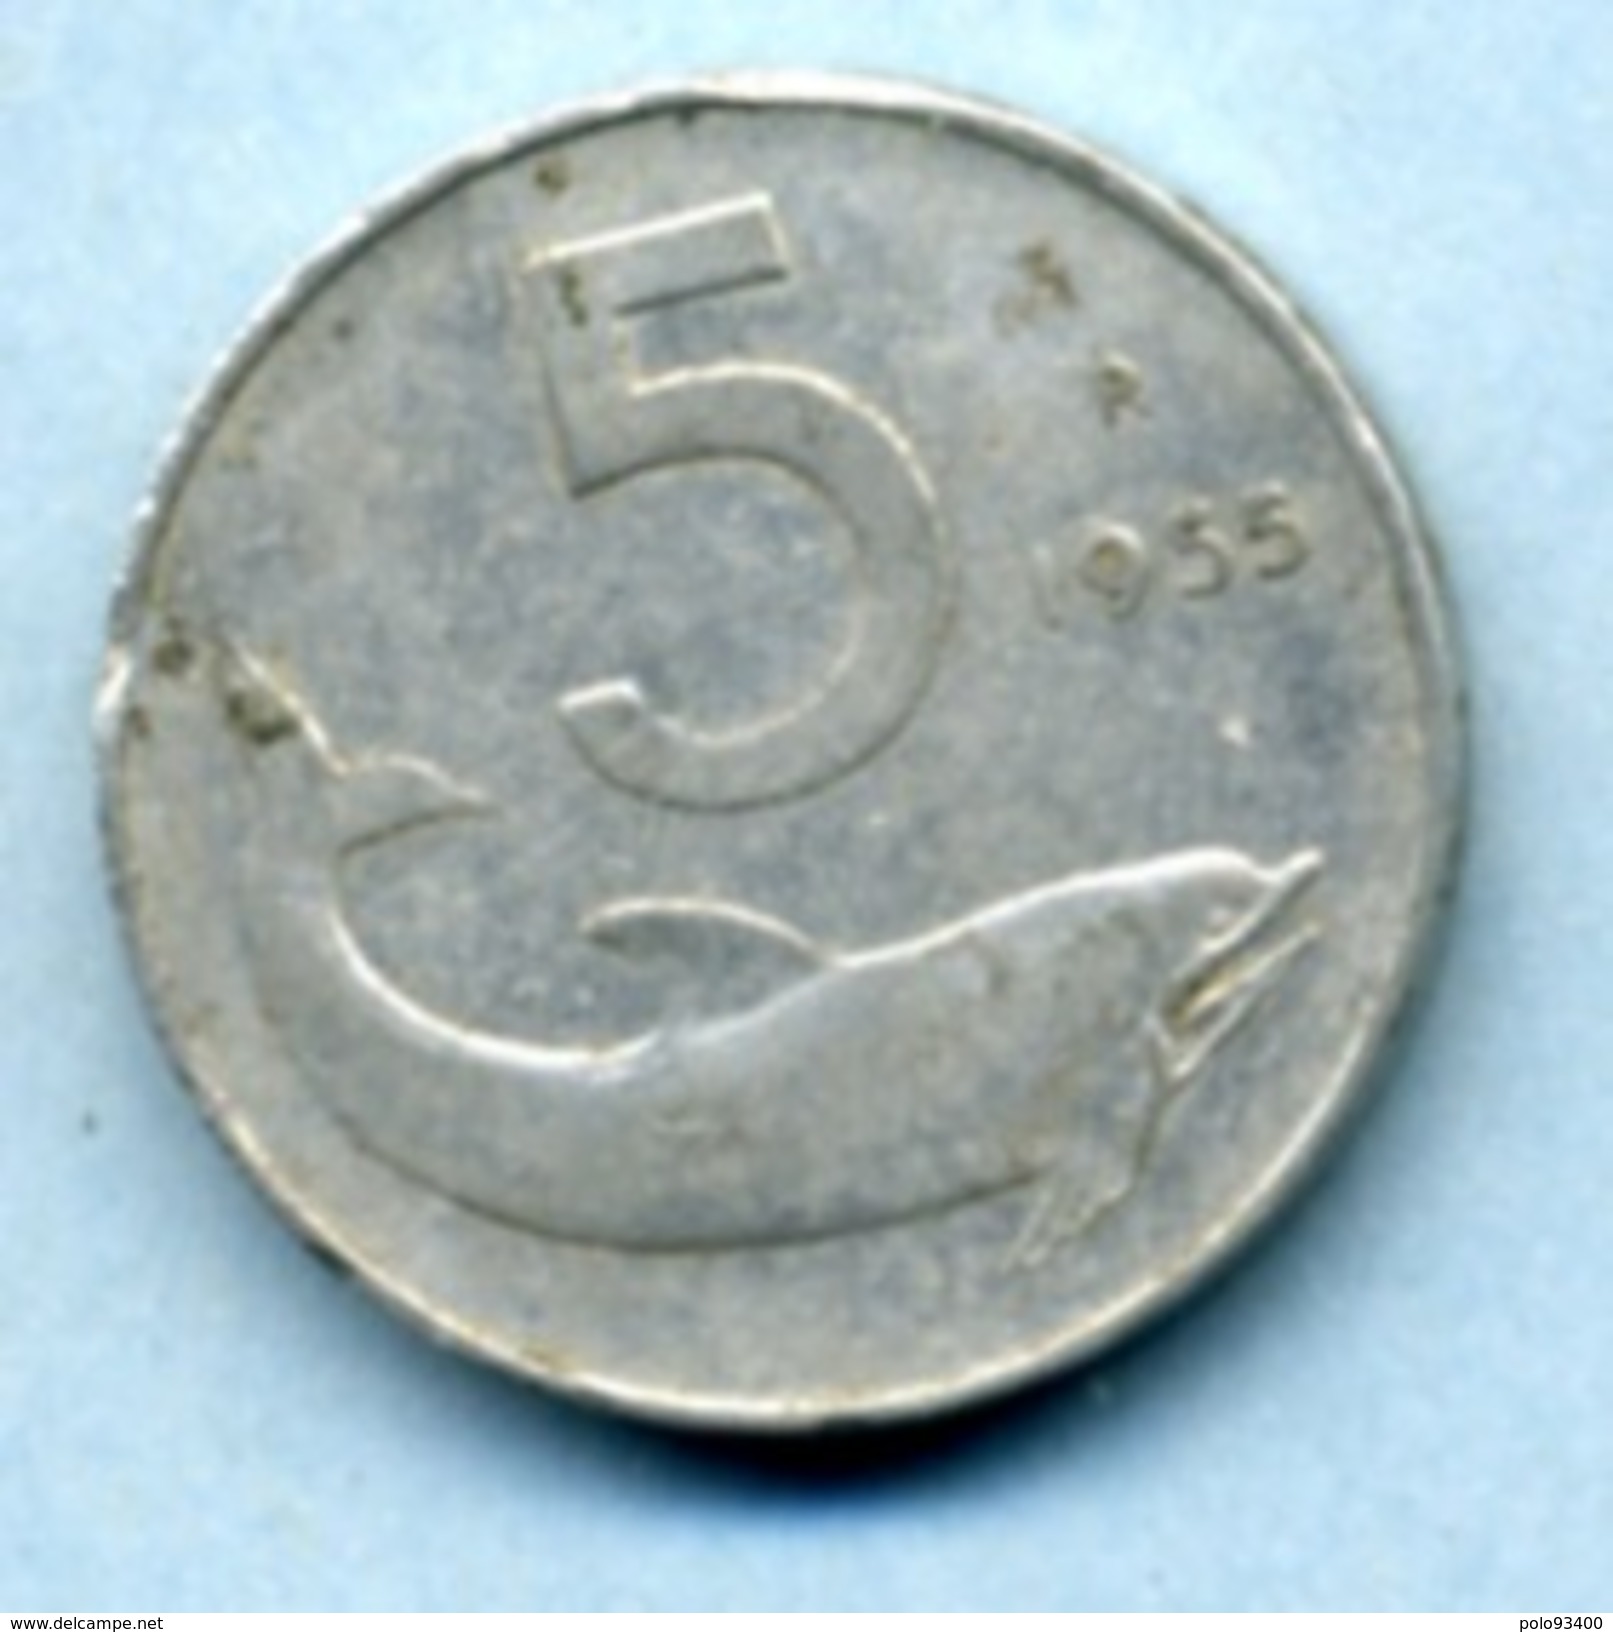 1955 5 LIRE - 5 Lire